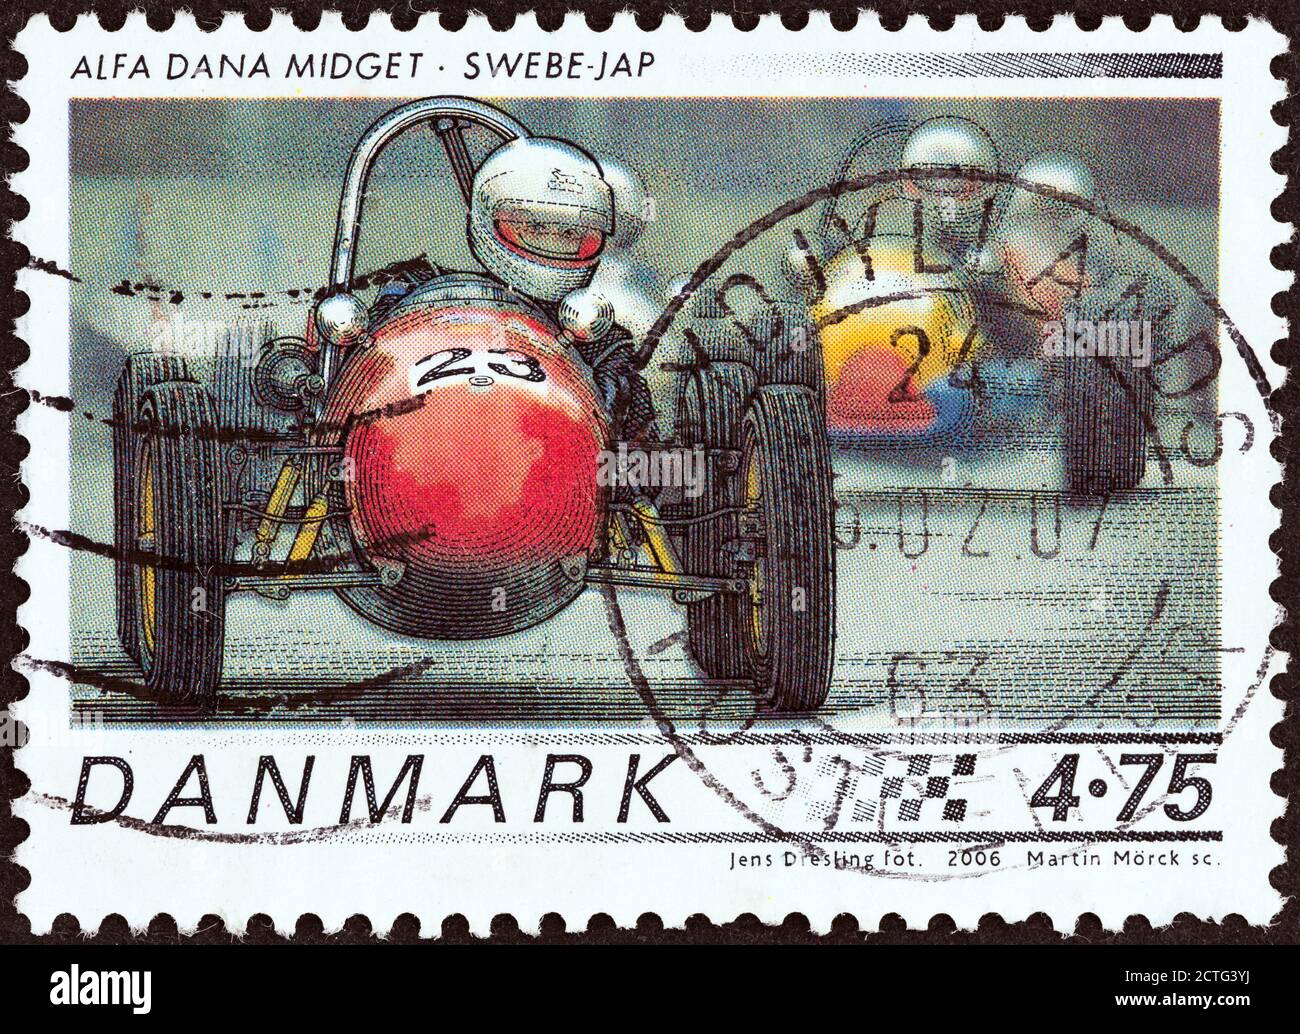 DENMARK - CIRCA 2006: A stamp printed in Denmark from the 'Race cars' issue shows 1958 Alfa Dana Midget, Swebe - JAP, circa 2006. Stock Photo